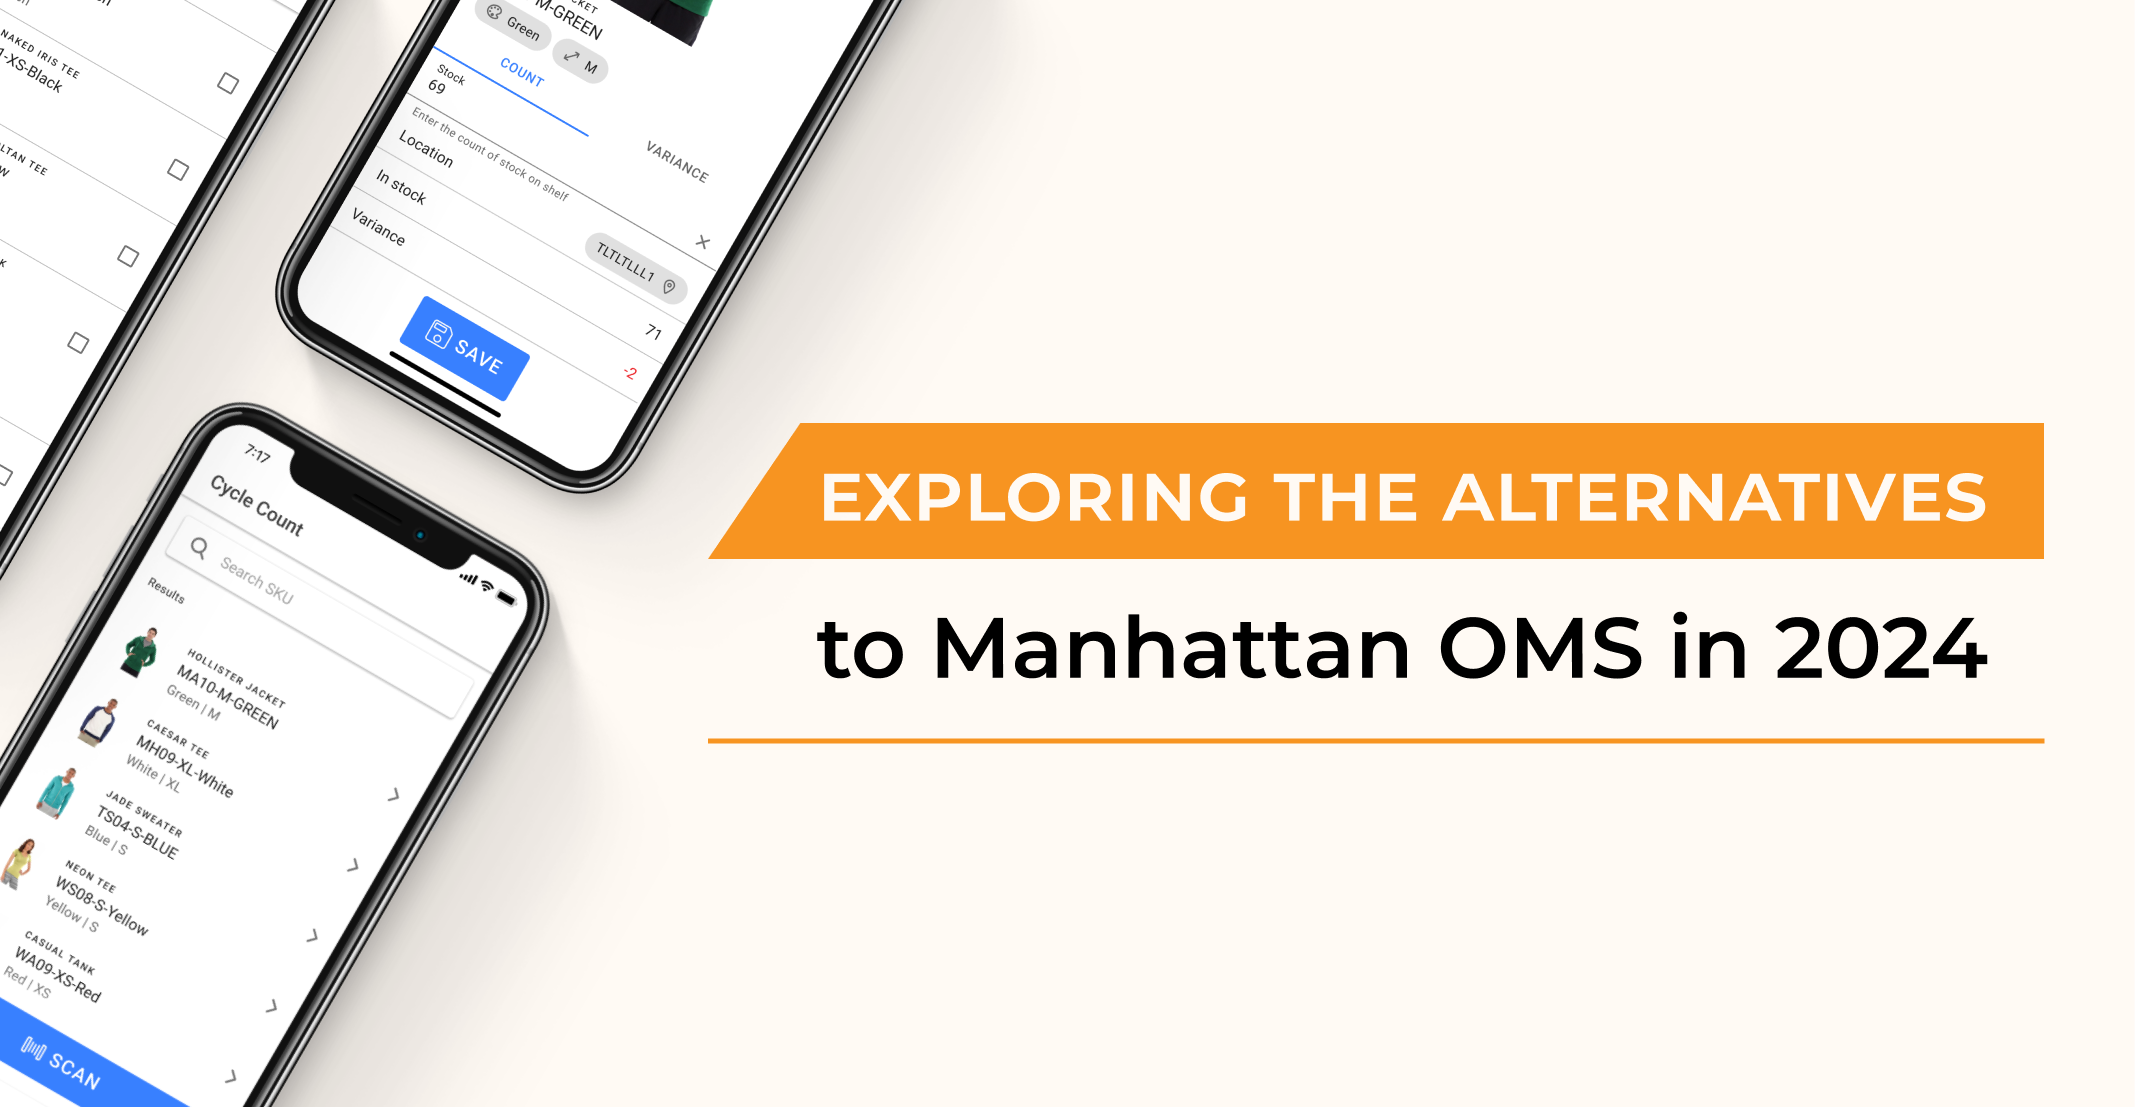 Exploring the alternatives to Manhattan OMS